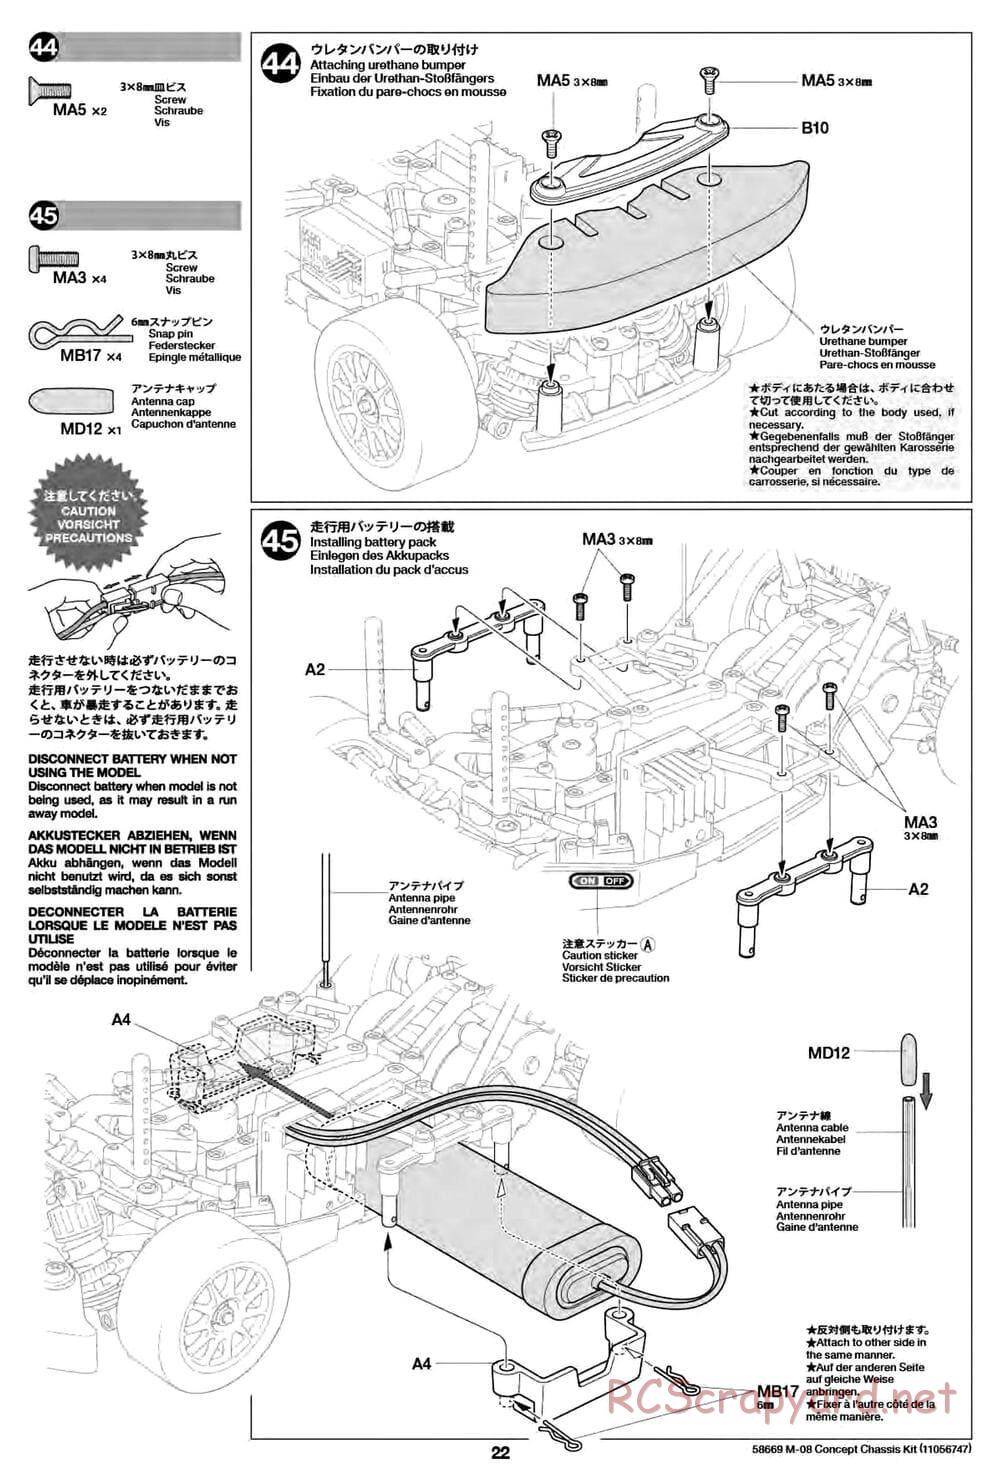 Tamiya - M-08 Concept Chassis - Manual - Page 22